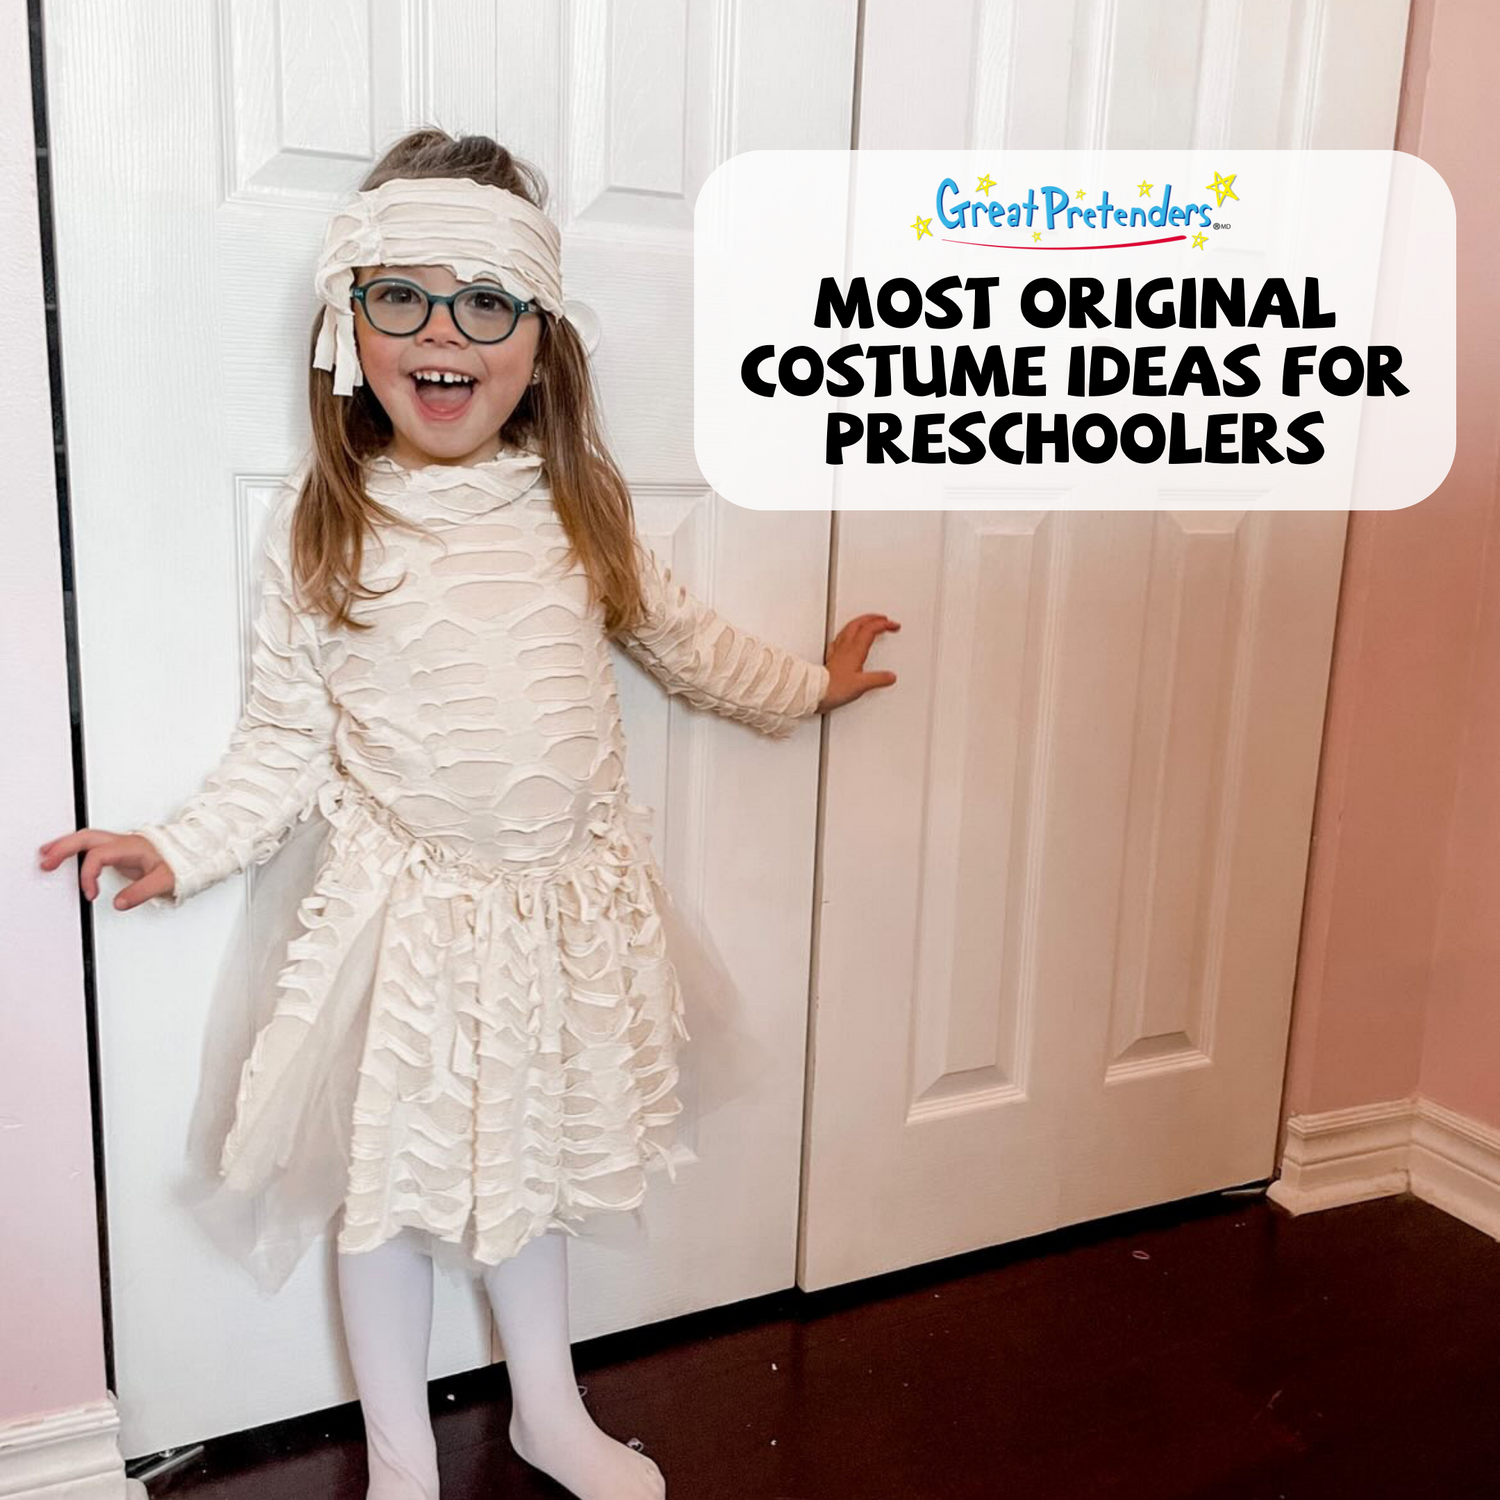 Most Original Costume Ideas for Preschoolers